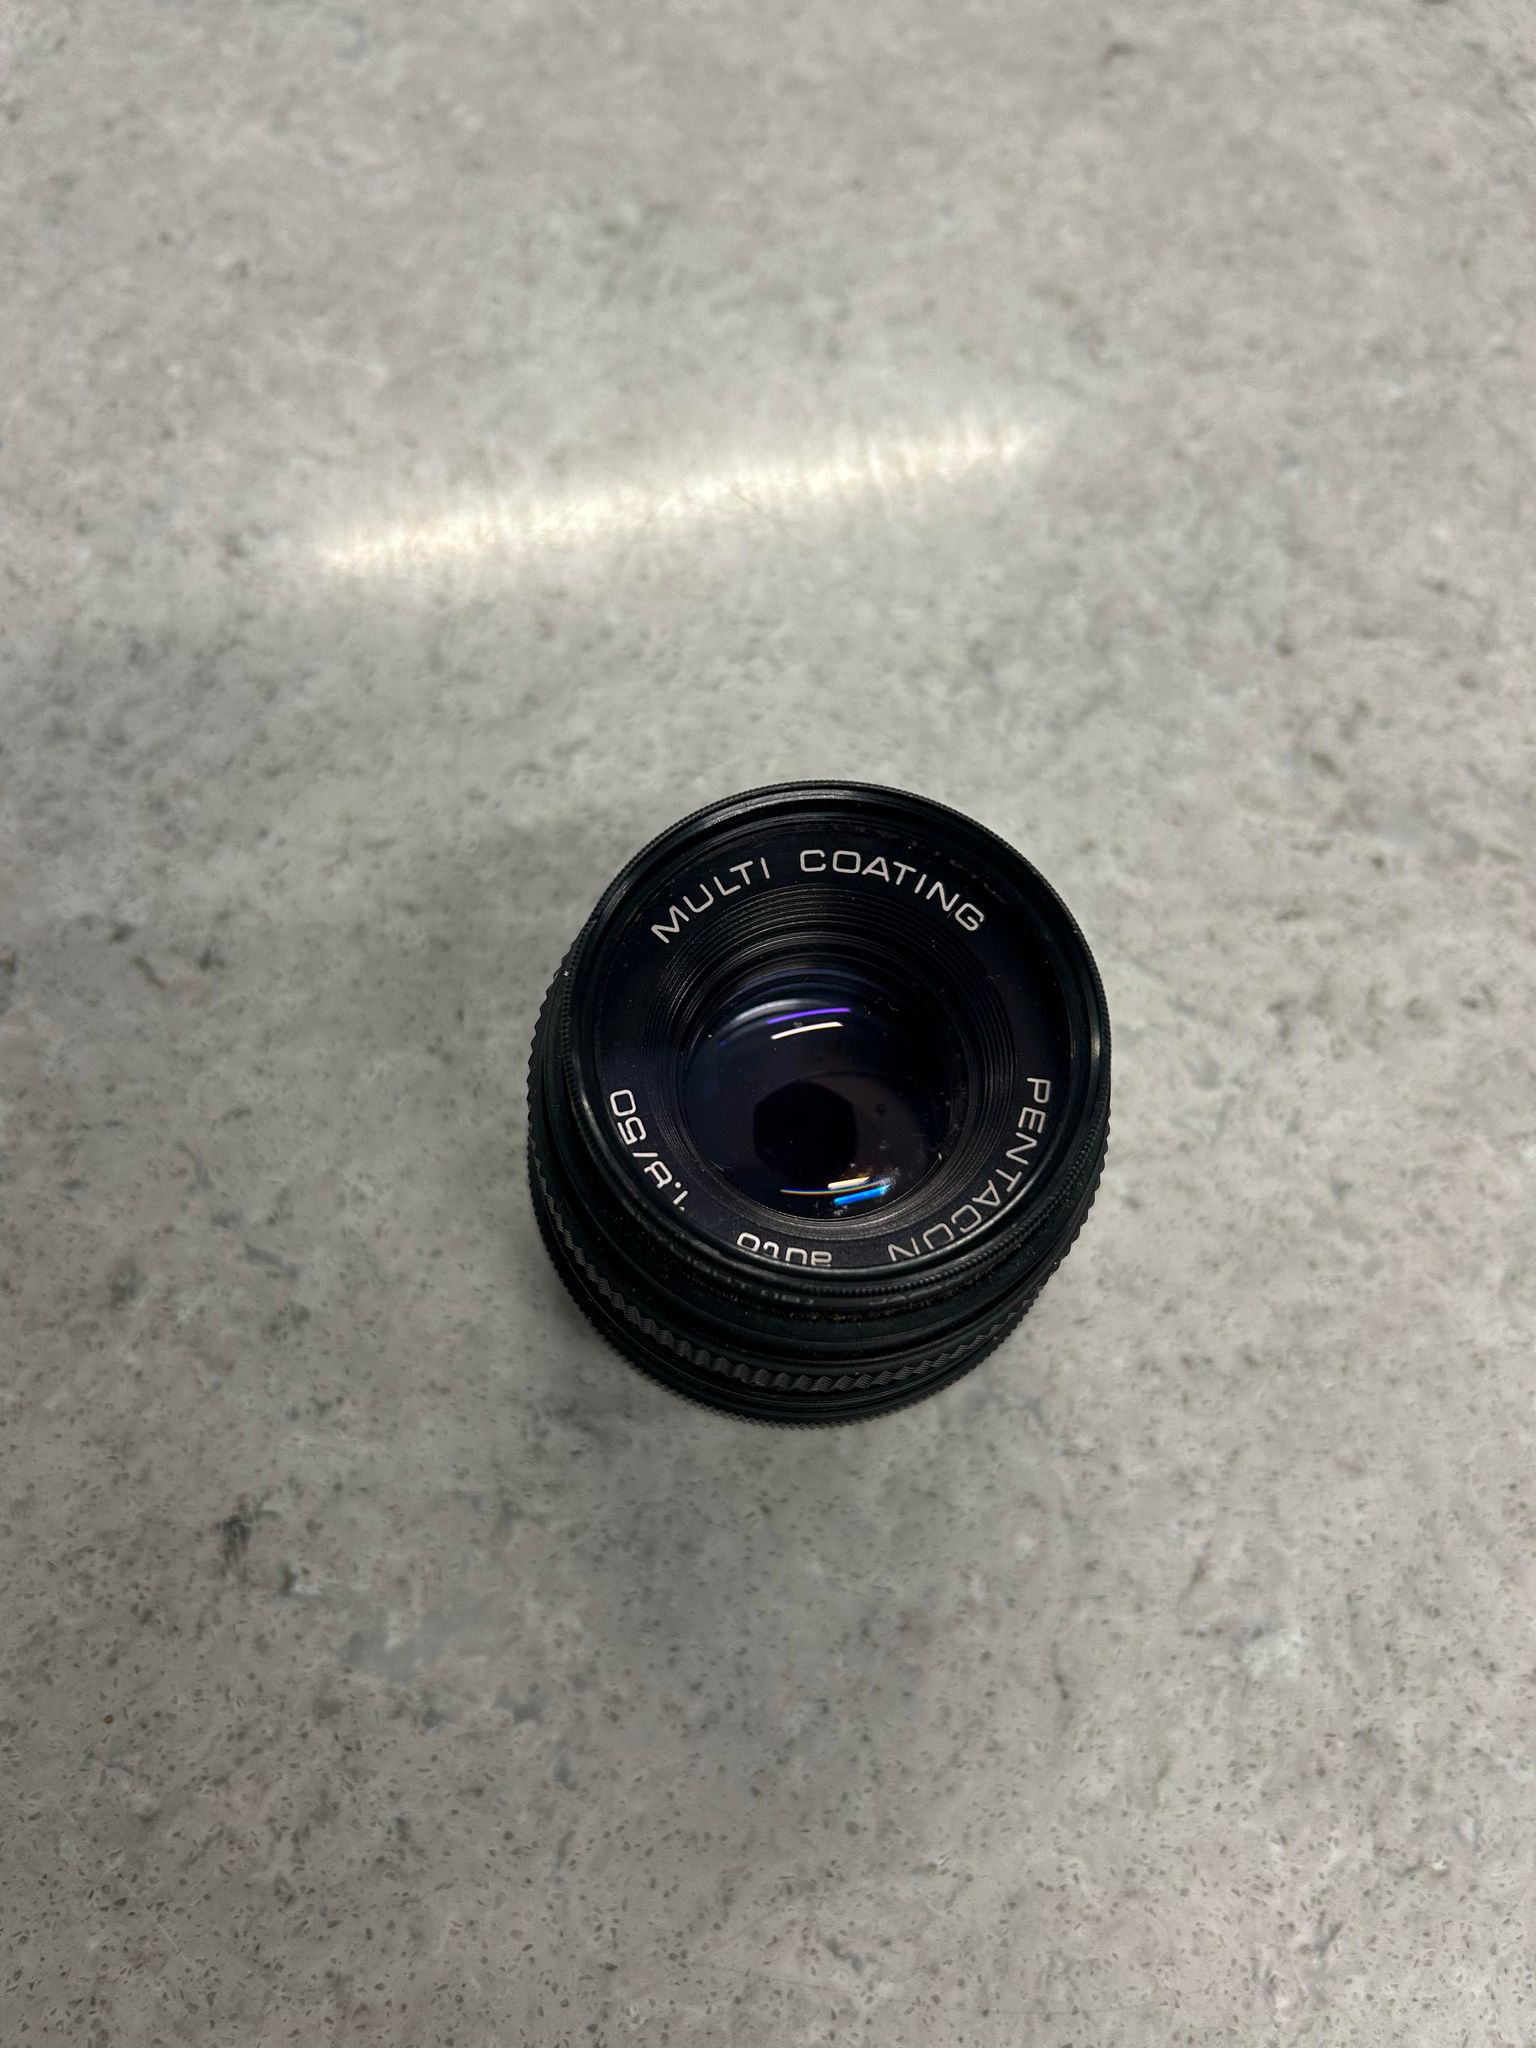 Pentacon Multi Coating Auto 1.8/50 Lens